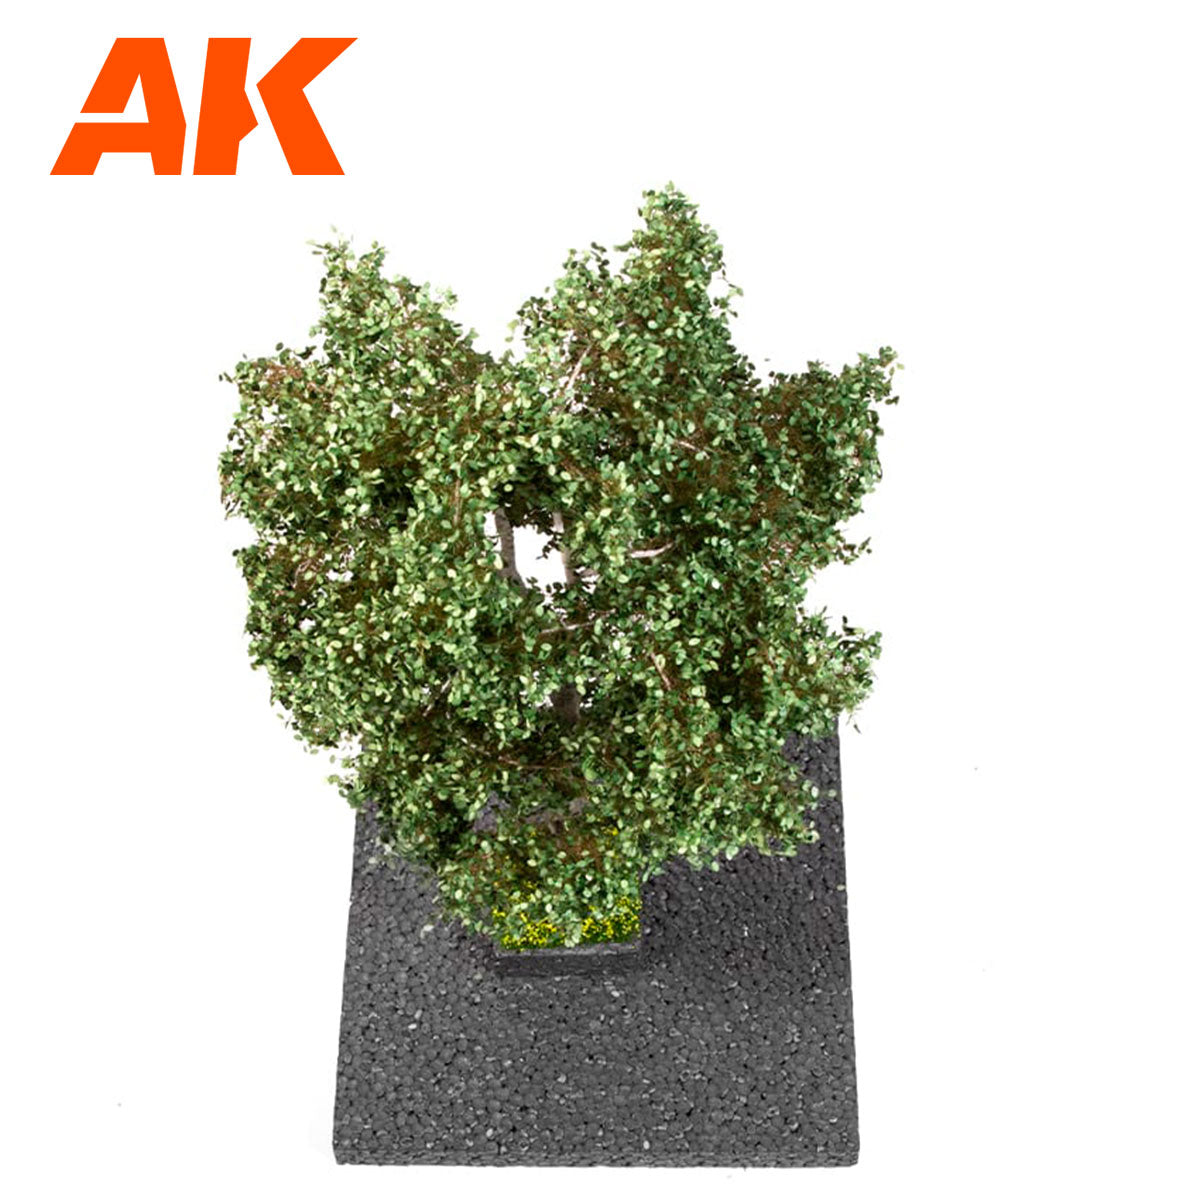 AK8194 - White Poplar Summer Tree 1:35 and 1:32